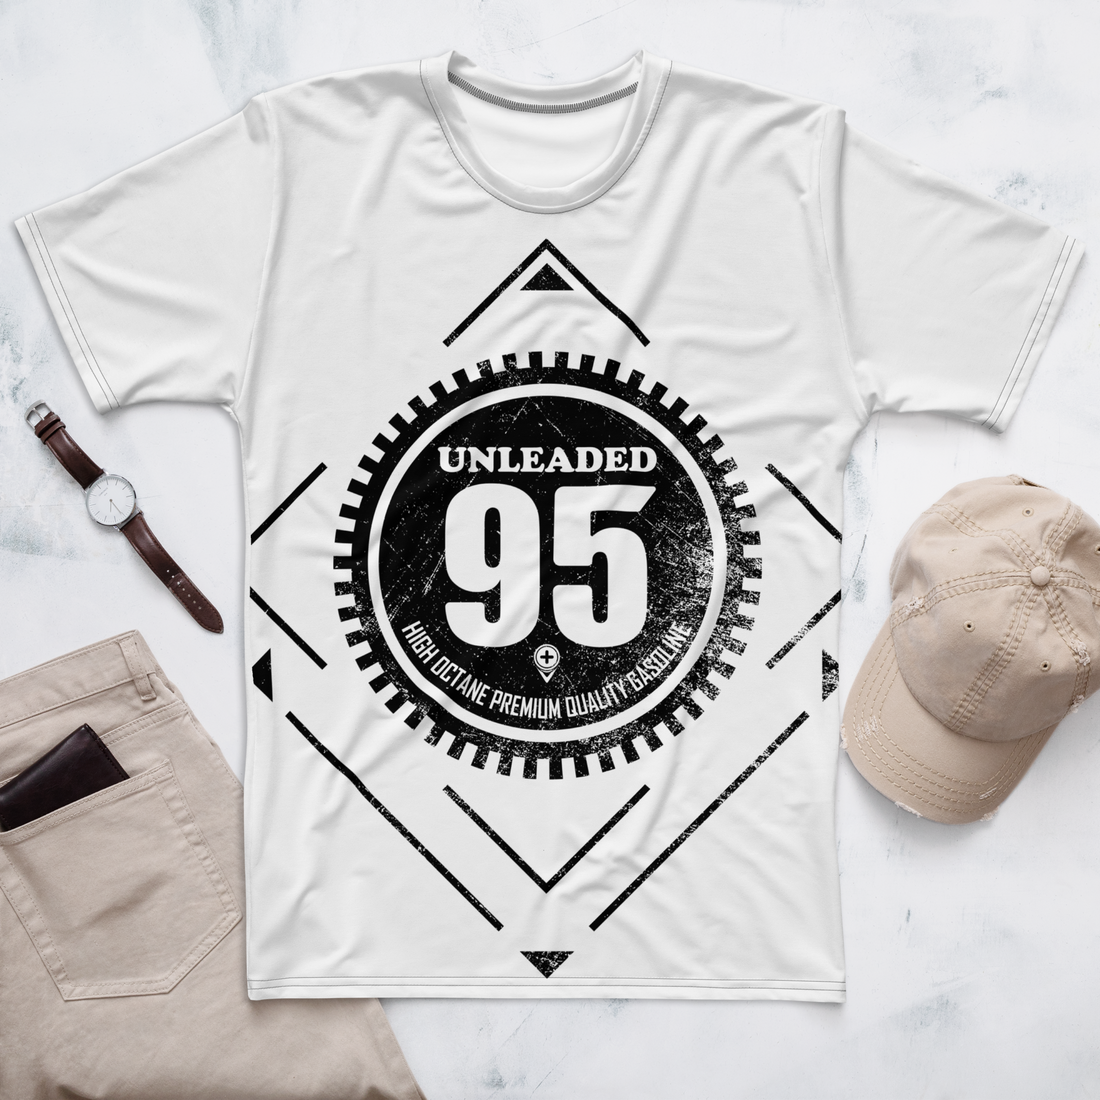 UNLEADED 95 Monochrome T-Shirt